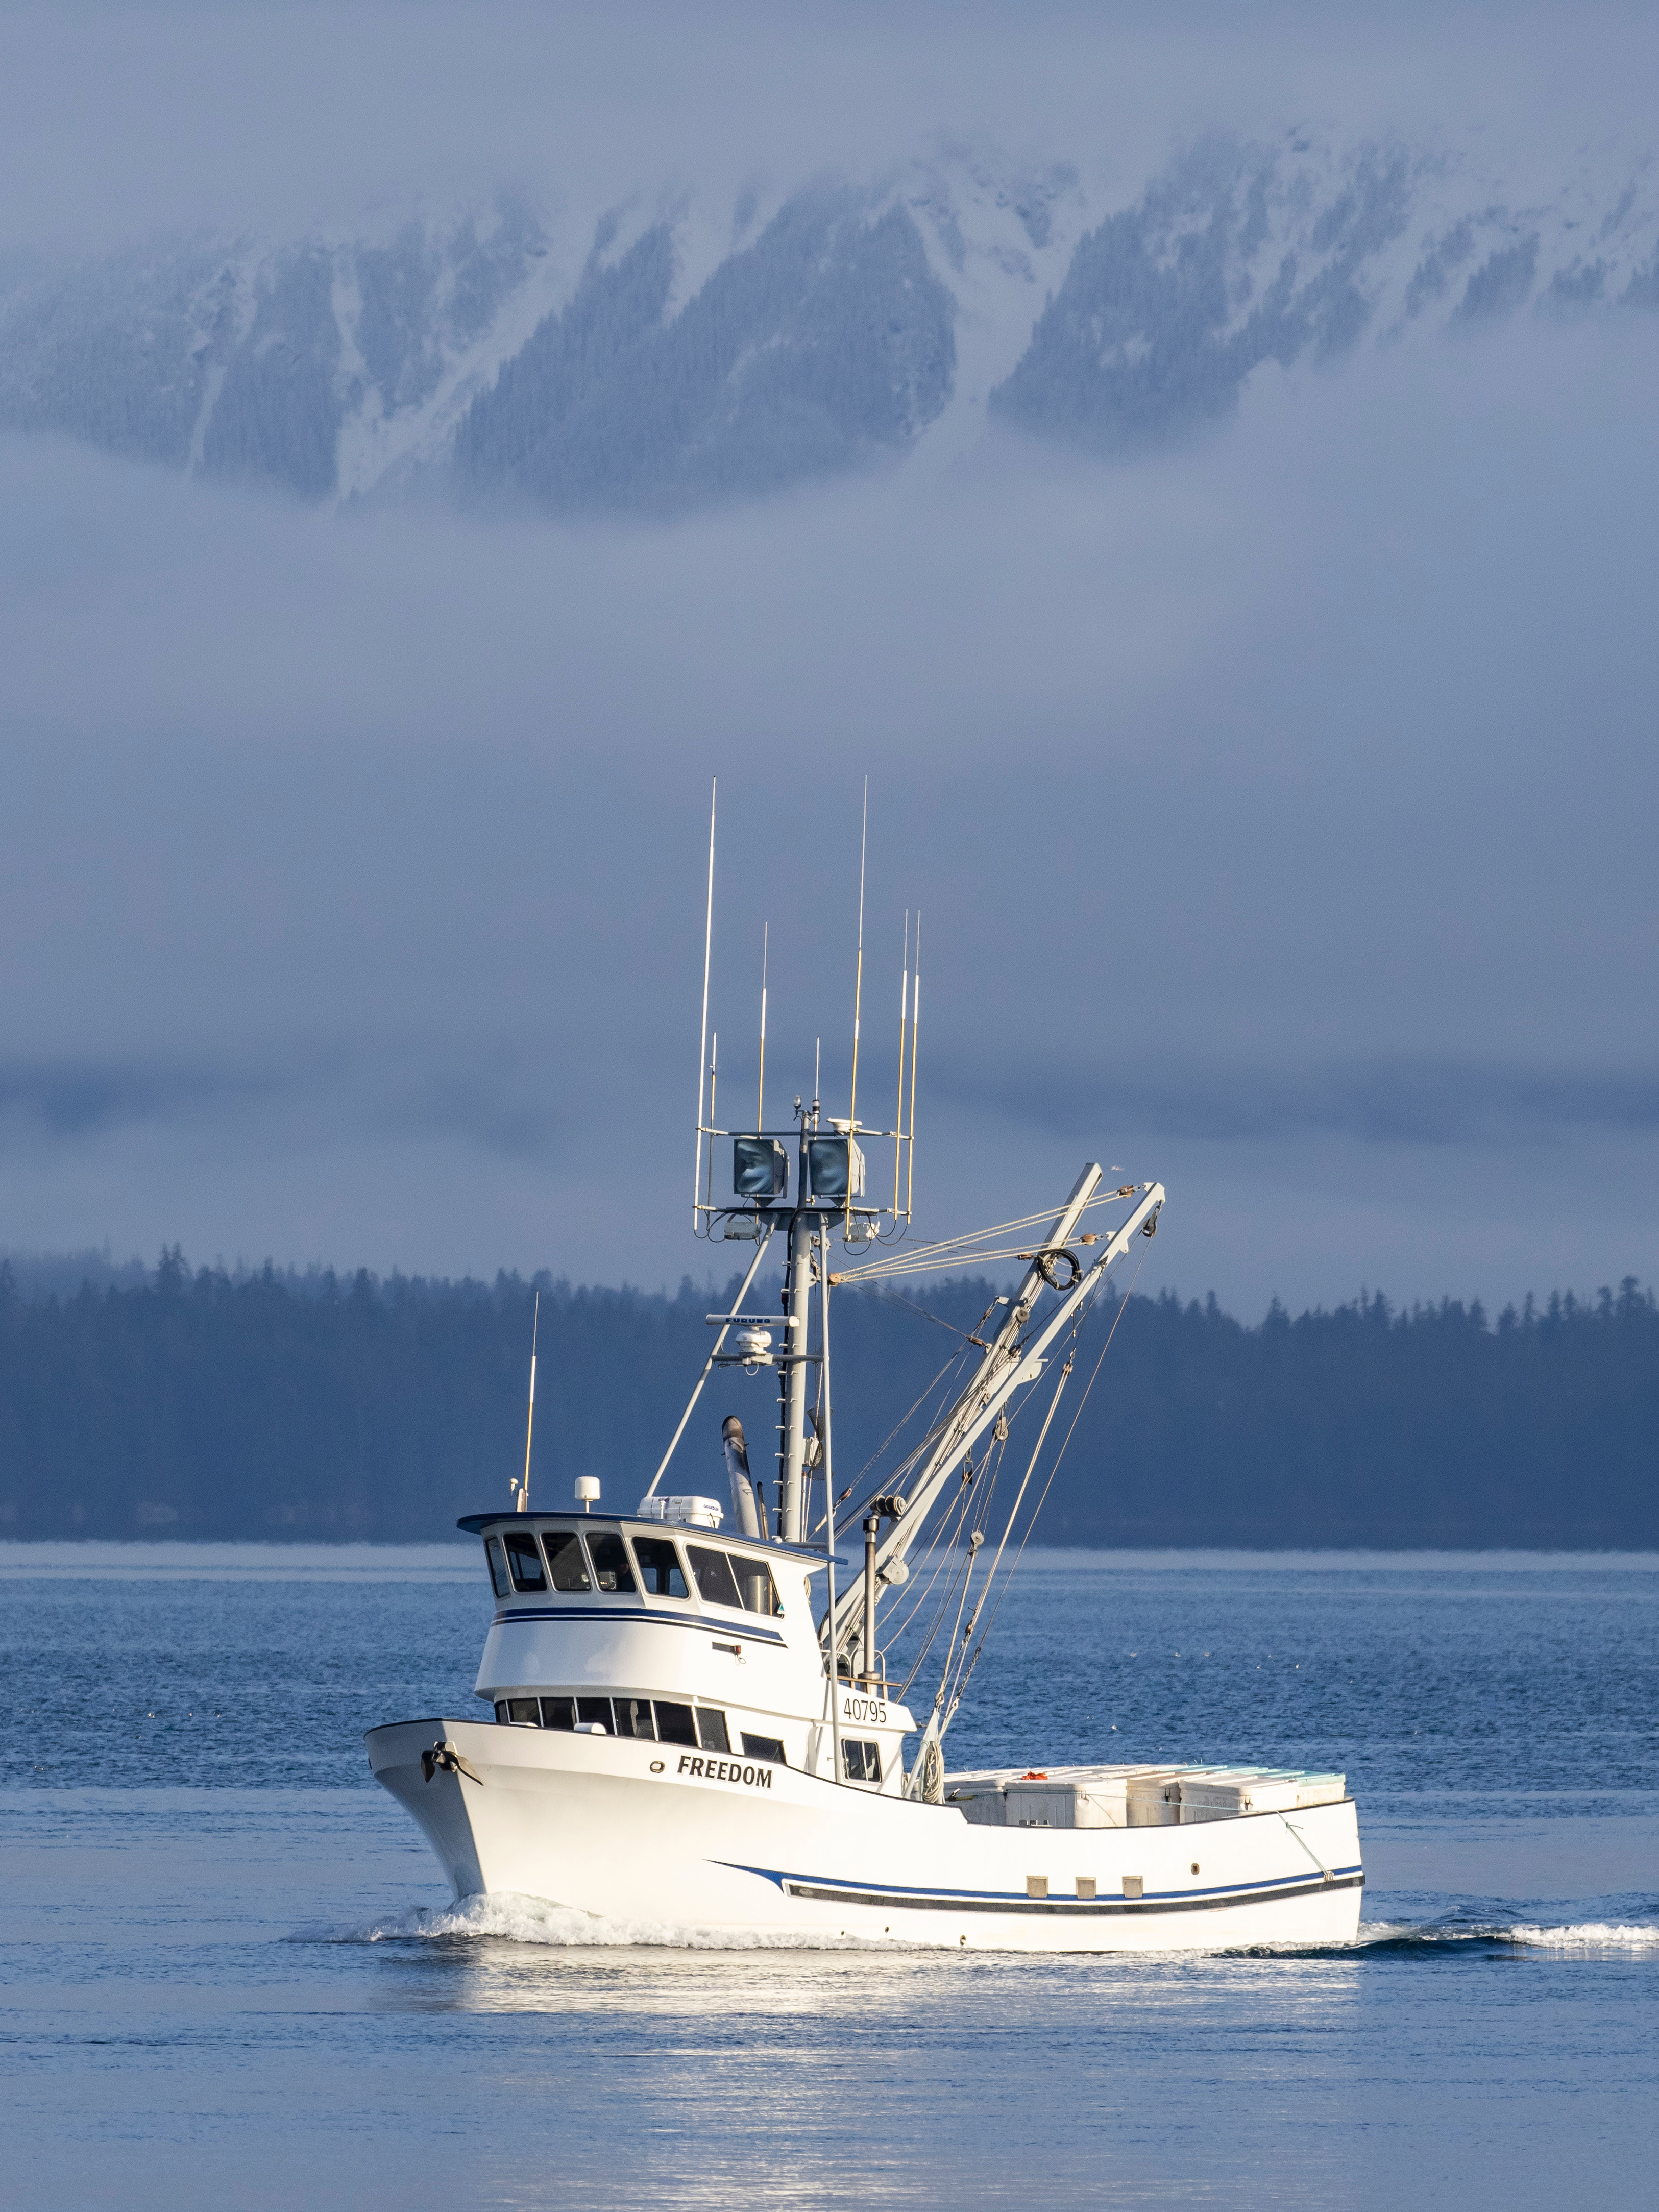 DVIDS - Images - Coast Guard medevacs man from fishing vessel Kari Marie  201 miles north of St. Paul, Alaska [Image 1 of 2]